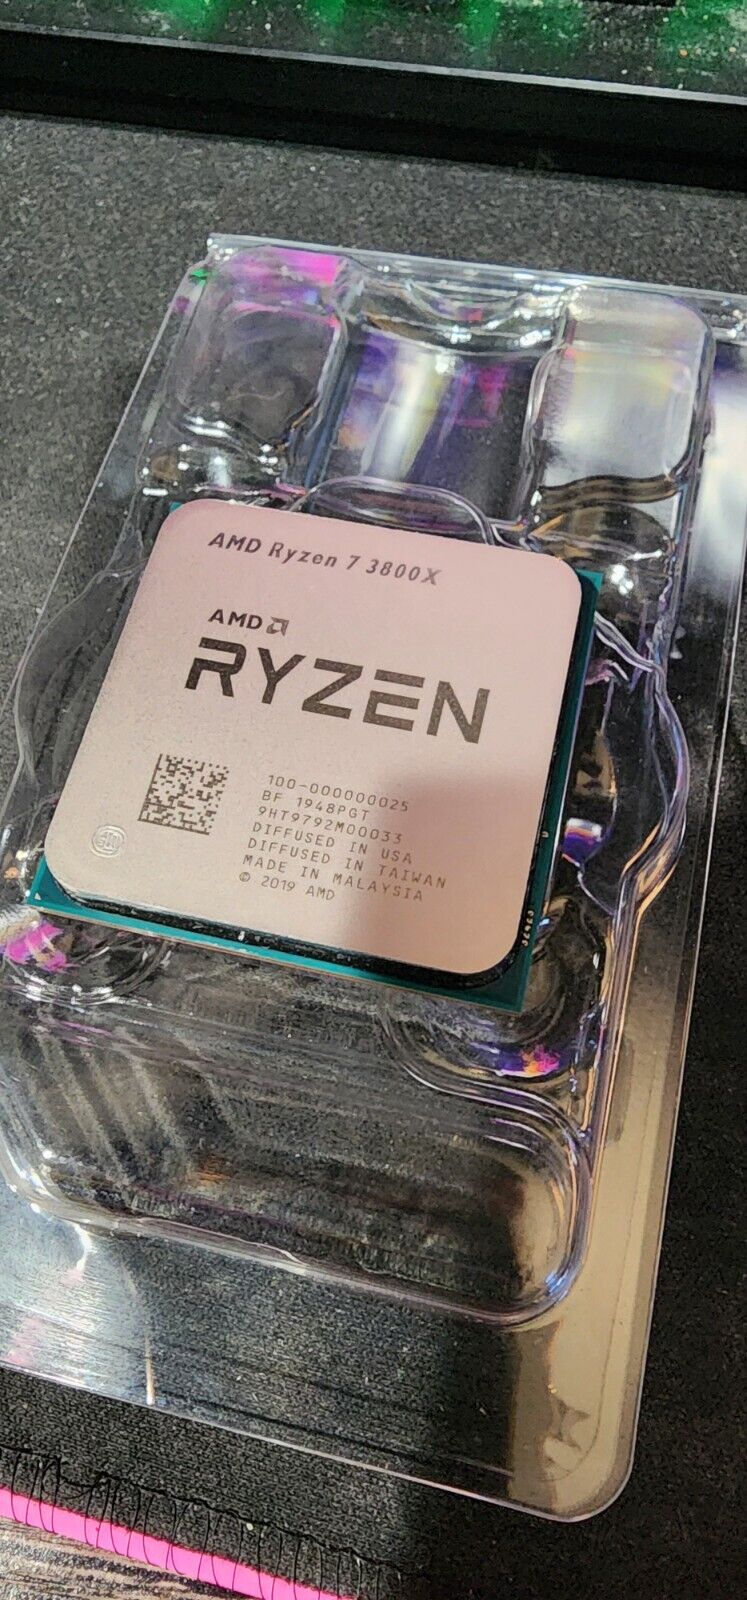 AMD Ryzen 7 3800X CPU Processor (4.7 GHz, 8 Cores, Socket AM4) Working Great 